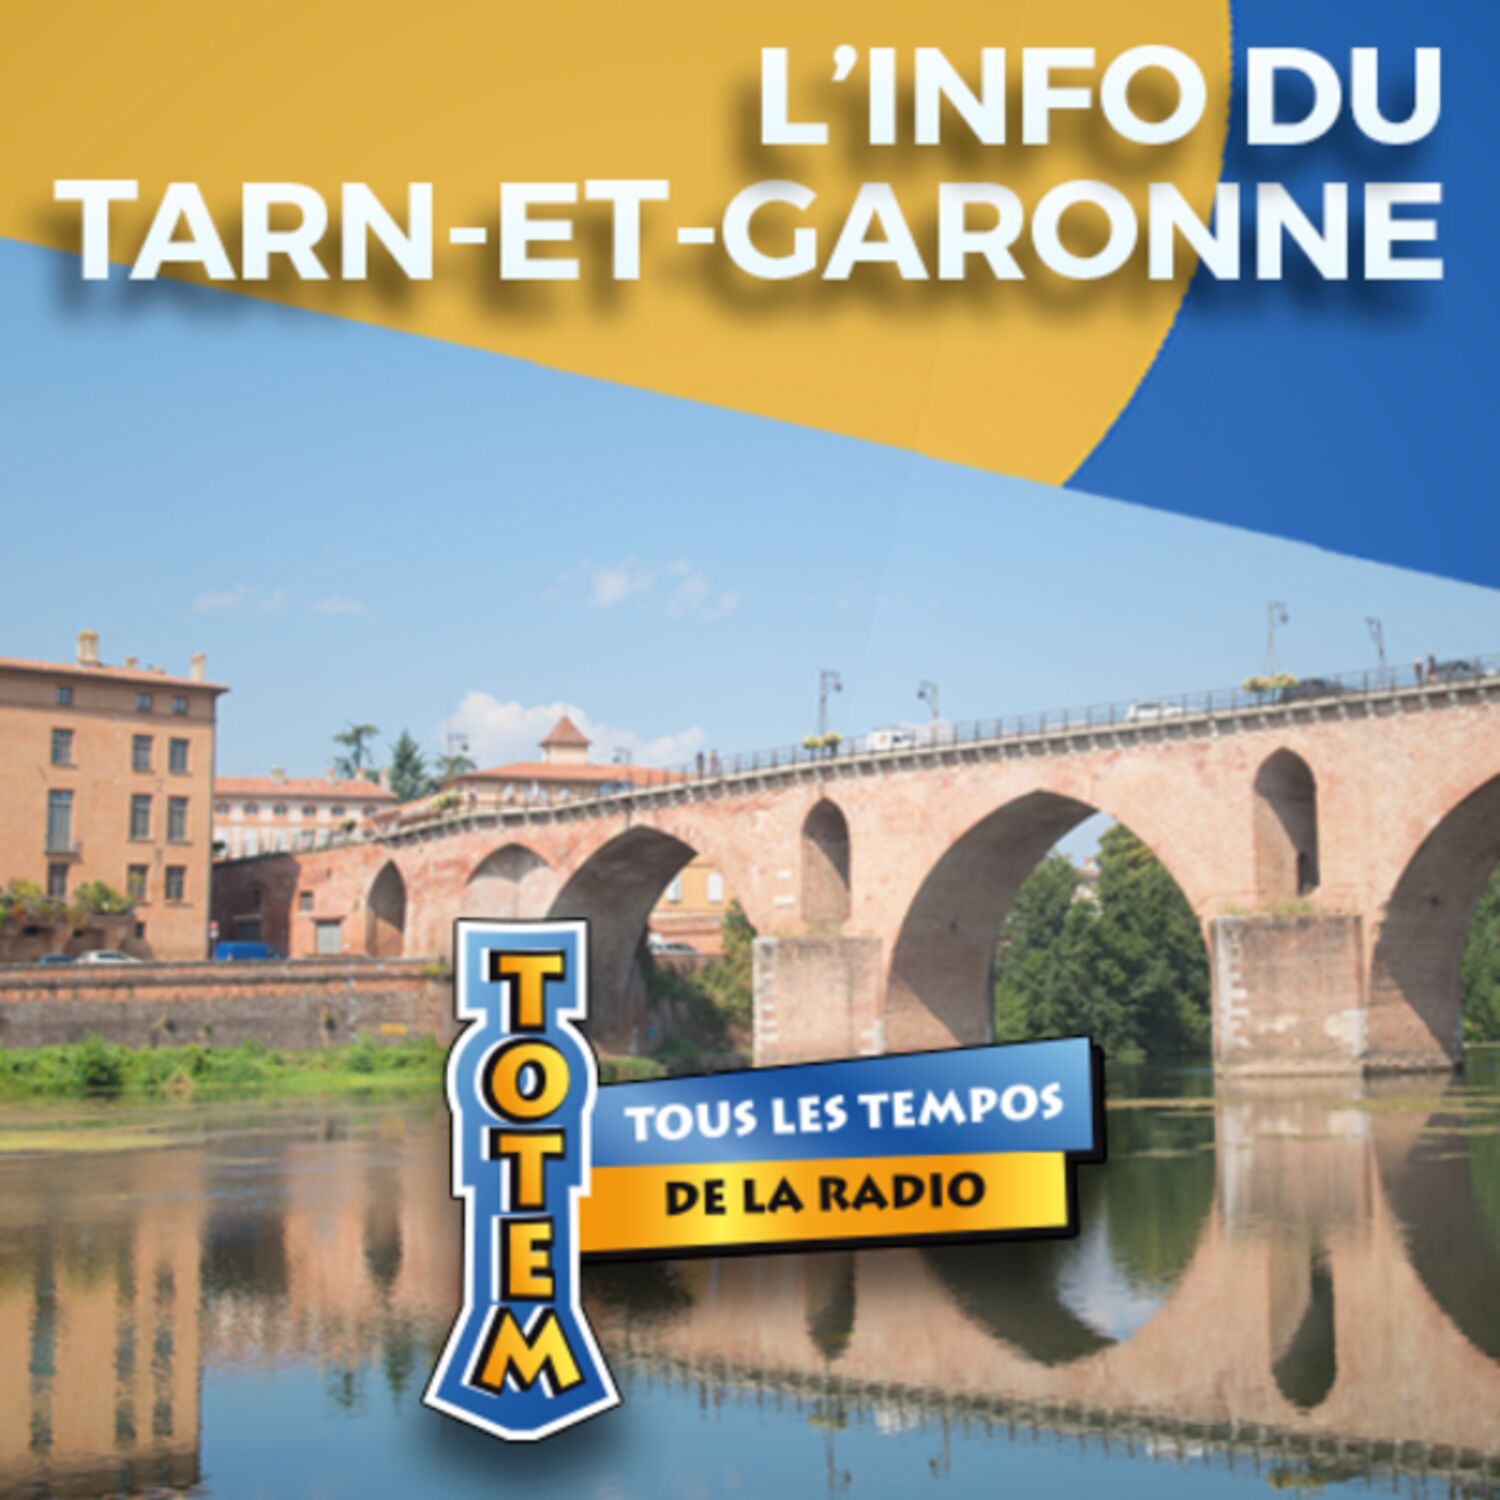 L'info du Tarn-et-Garonne du 20/04/23 à 17h59